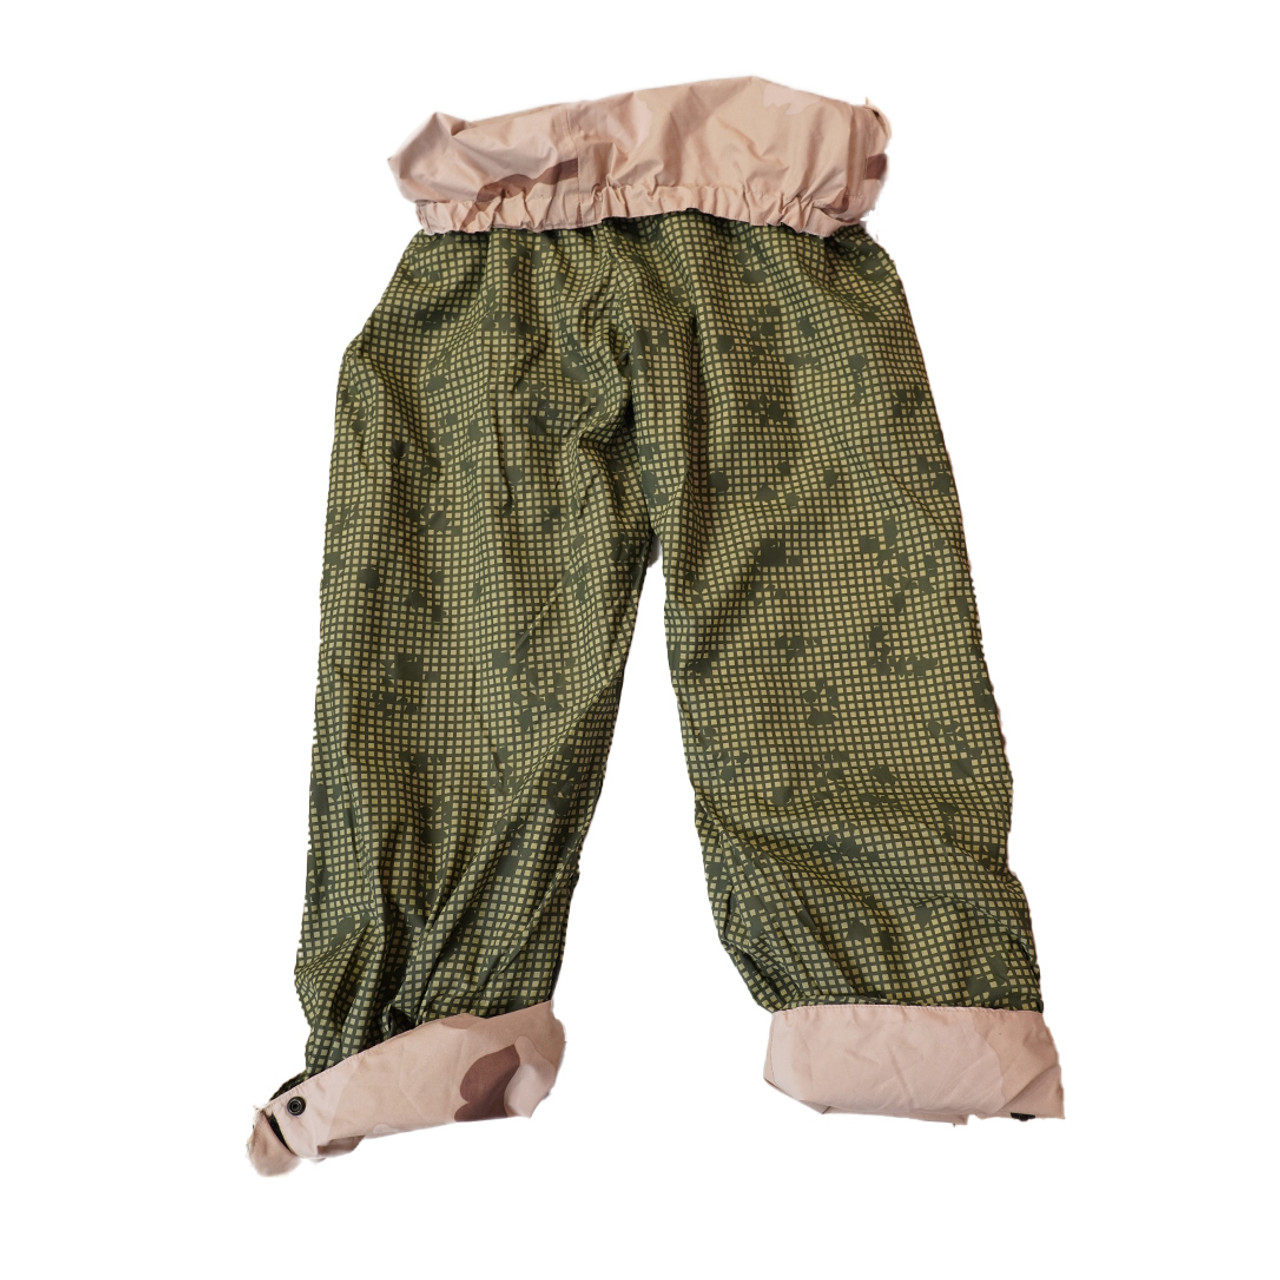 Desert Camouflage 3 Color Combat, Utility Pants, EXTRA LARGE LONG, XL